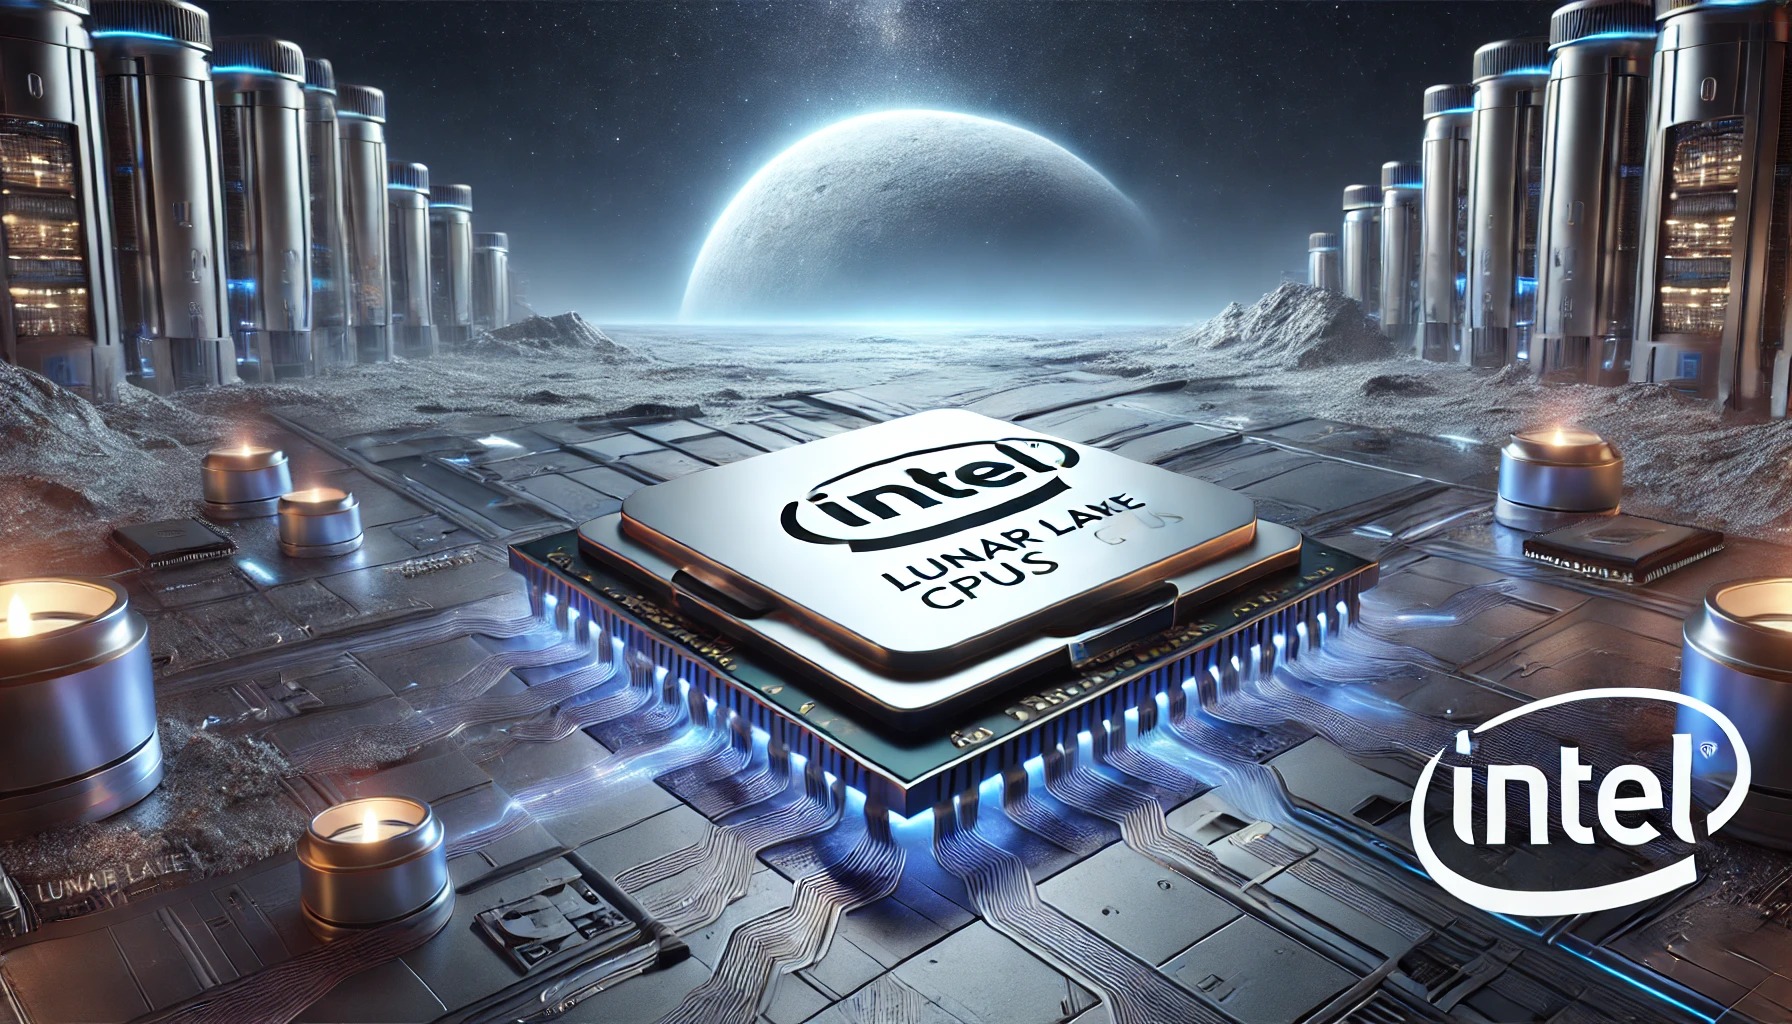 Intel’s Innovative Lunar Lake CPUs Progressing as Planned